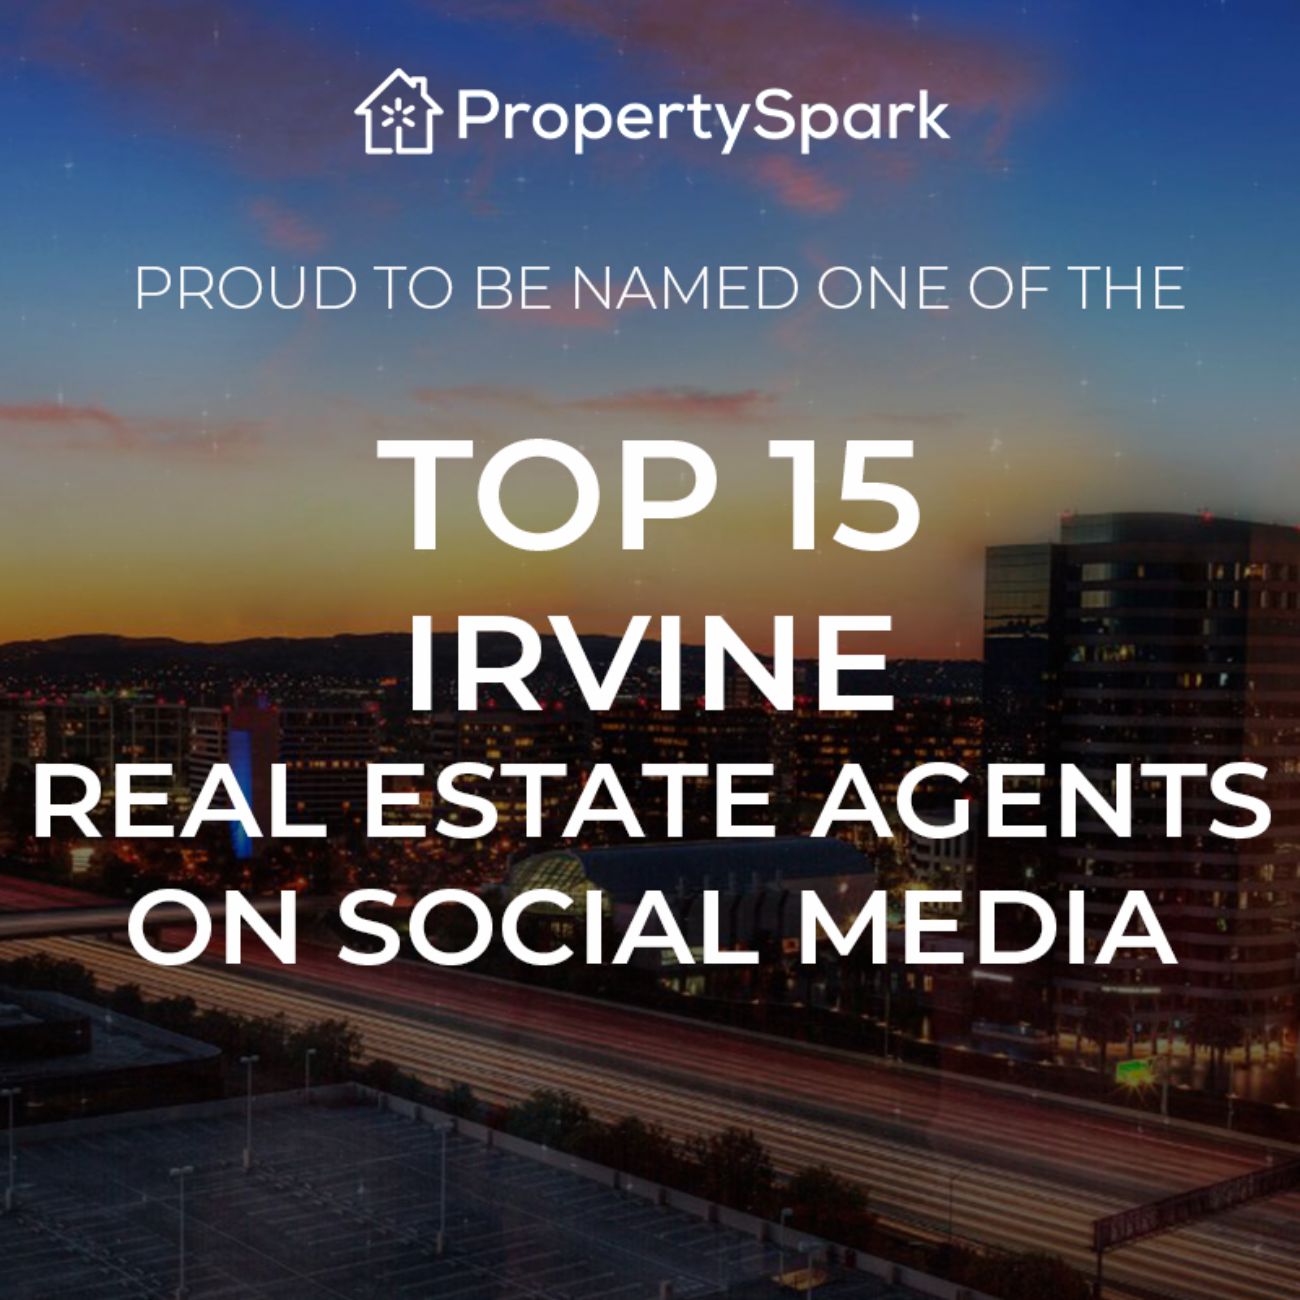 Top 15 Irvine Real Estate Agents On Social Media - PropertySpark